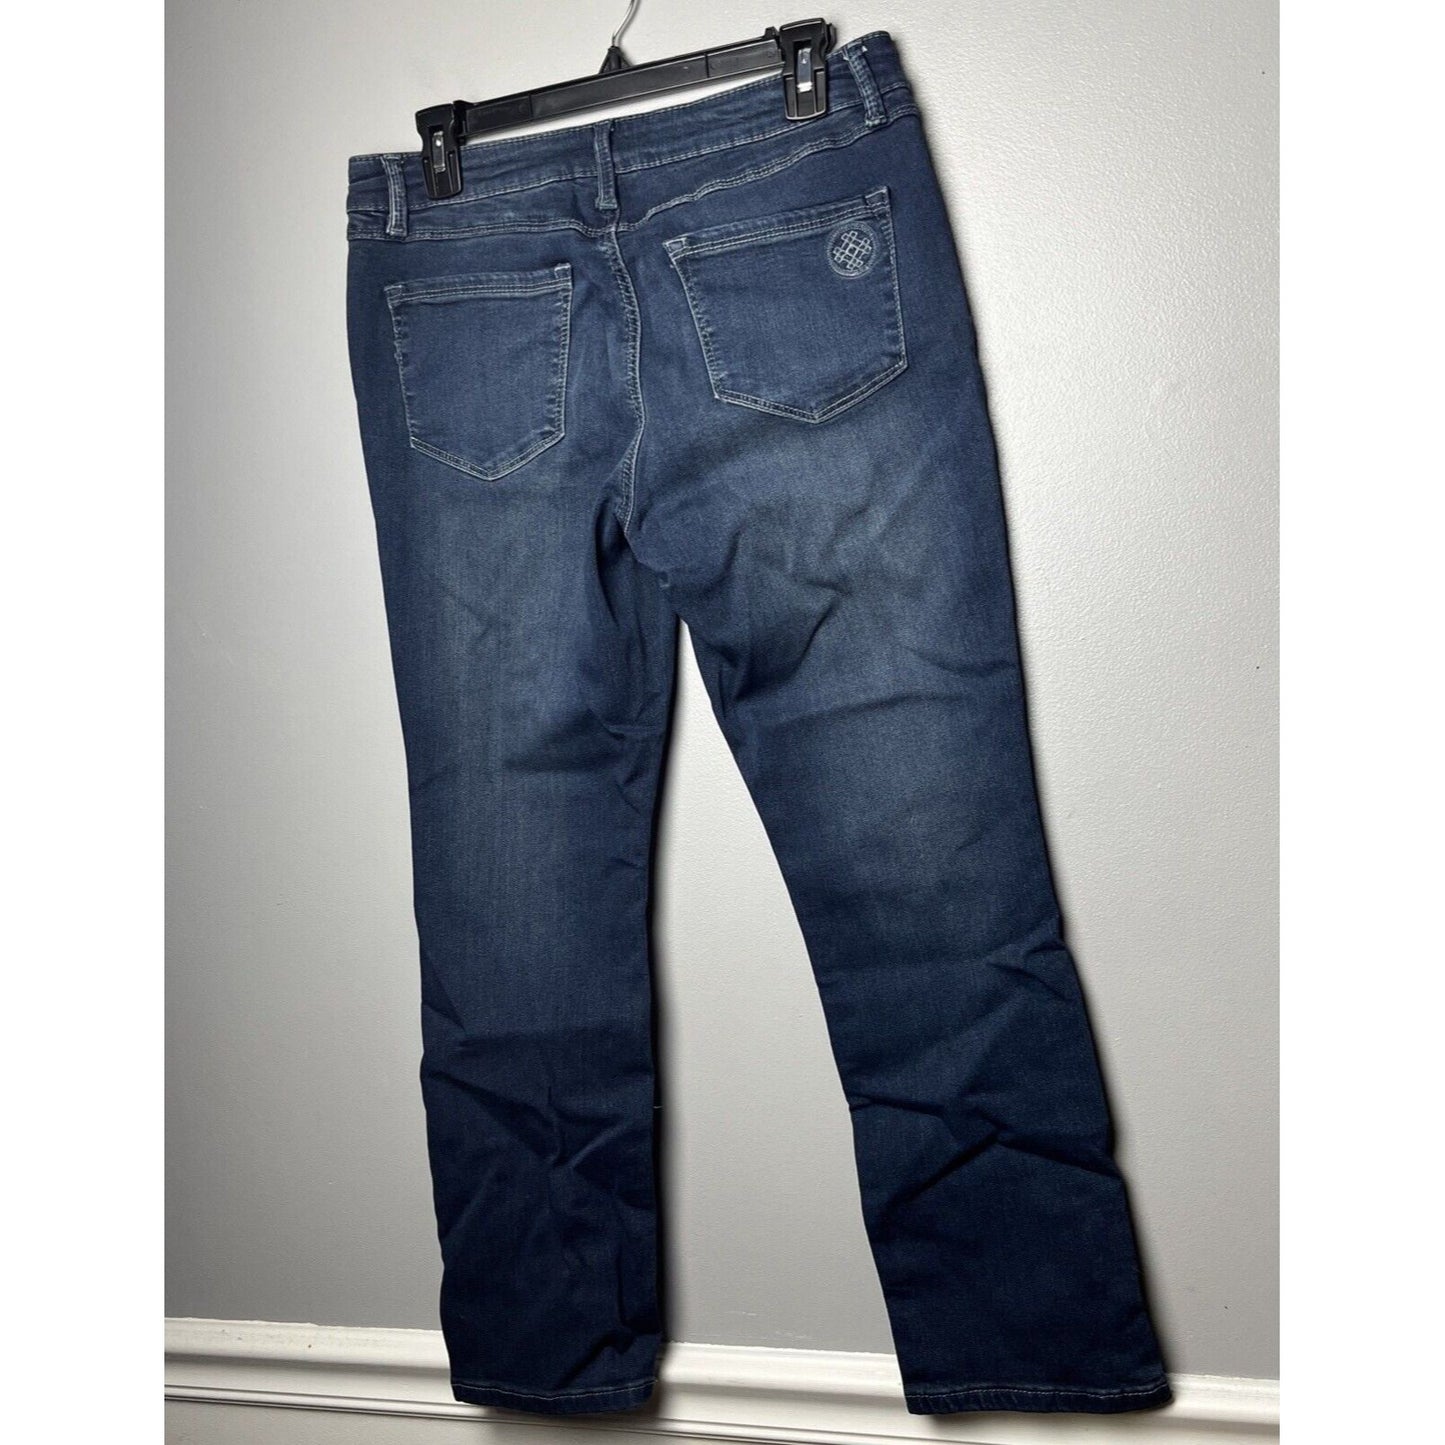 Laurie Felt Petite Silky Denim Easy Skinny Petite Jeans Size XSP Indigo A544342